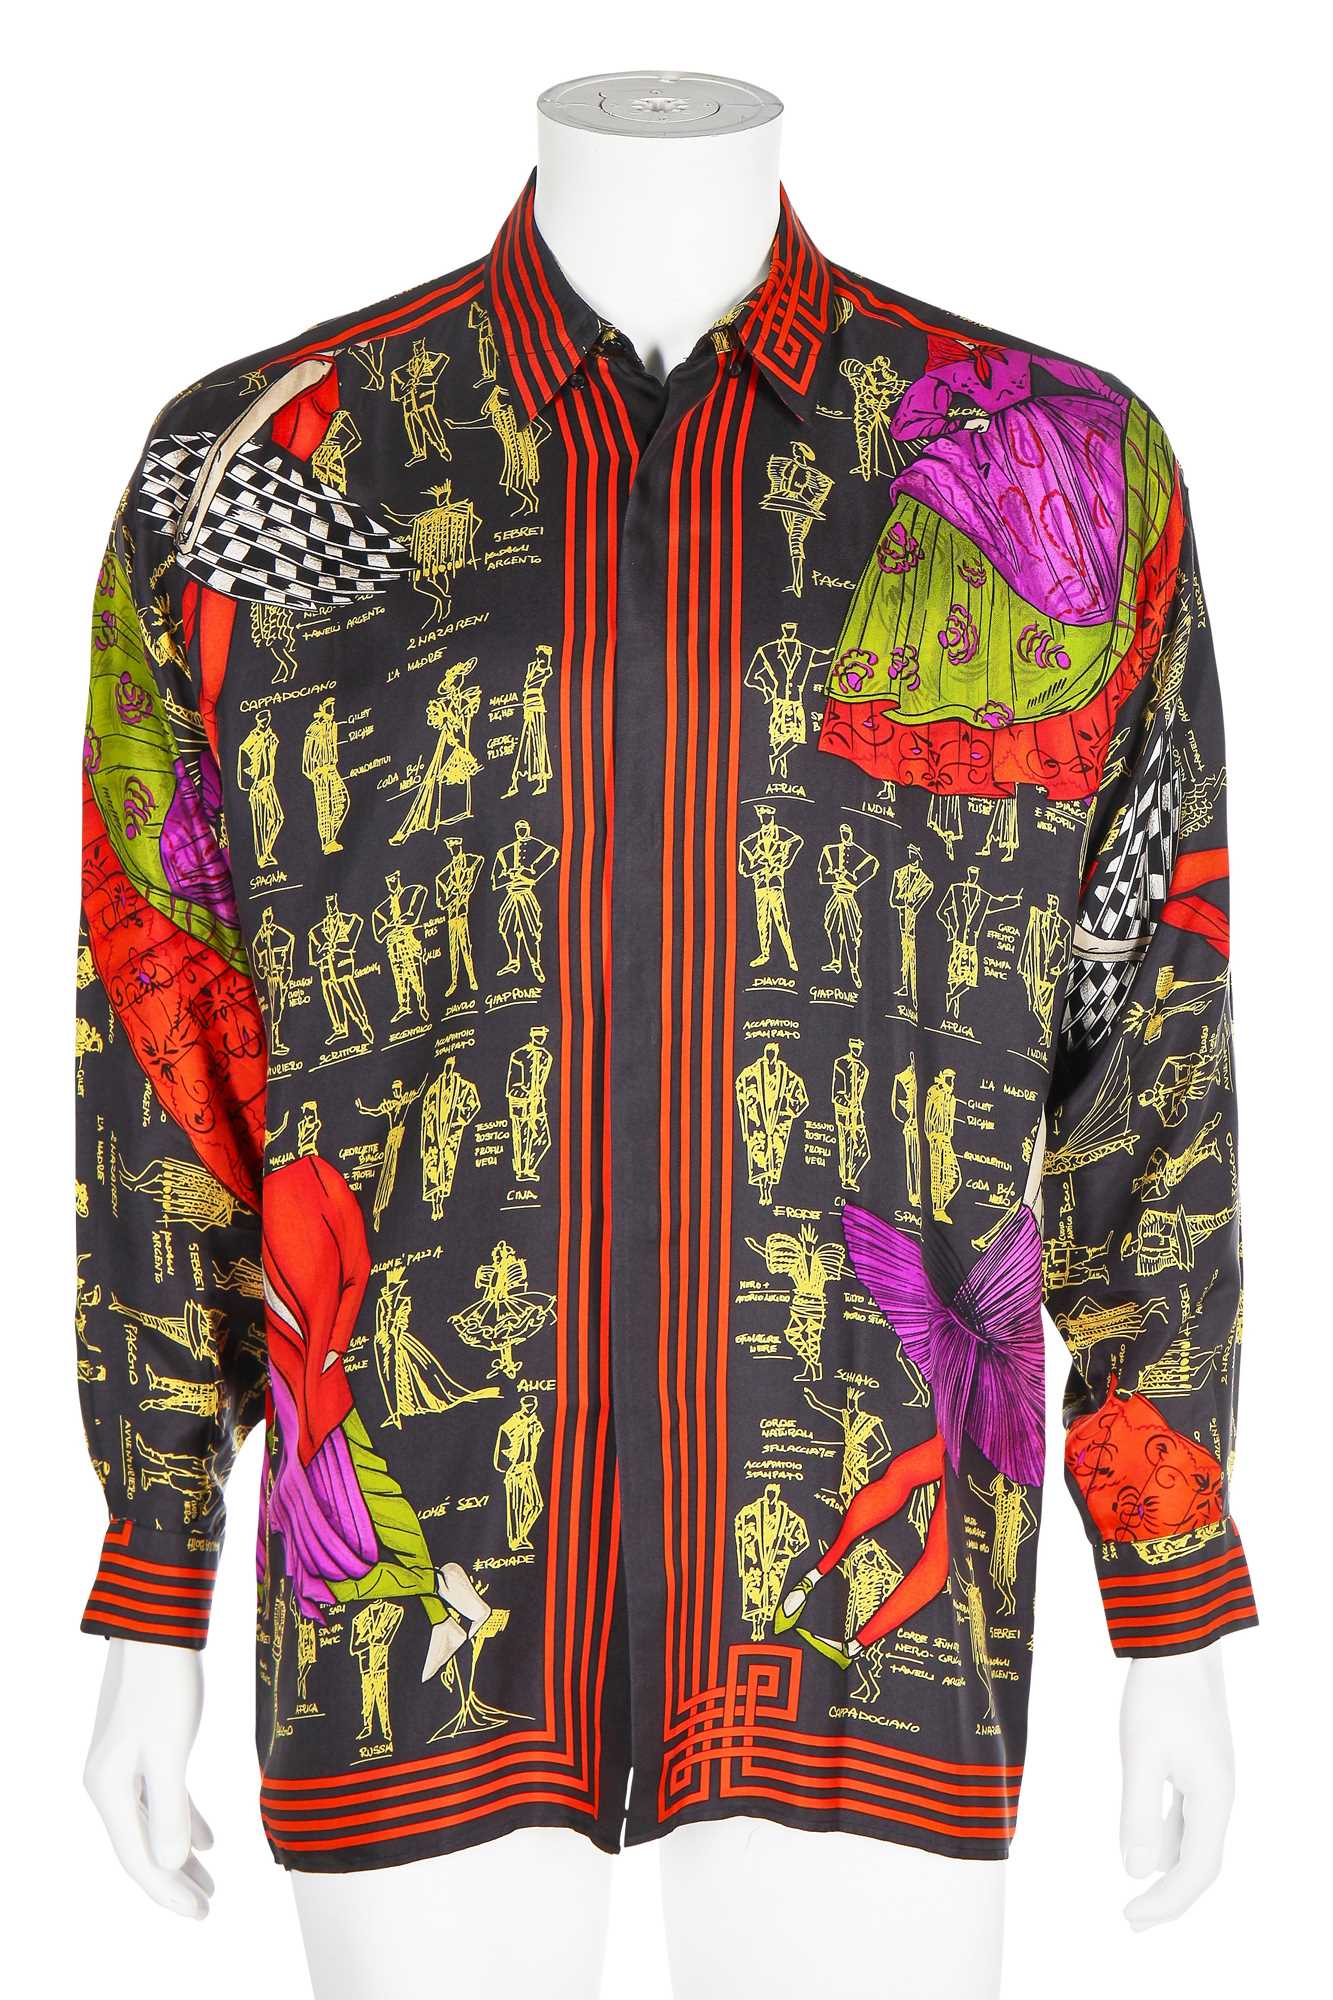 Versace silk shirts, 1992 : r/OldSchoolCool